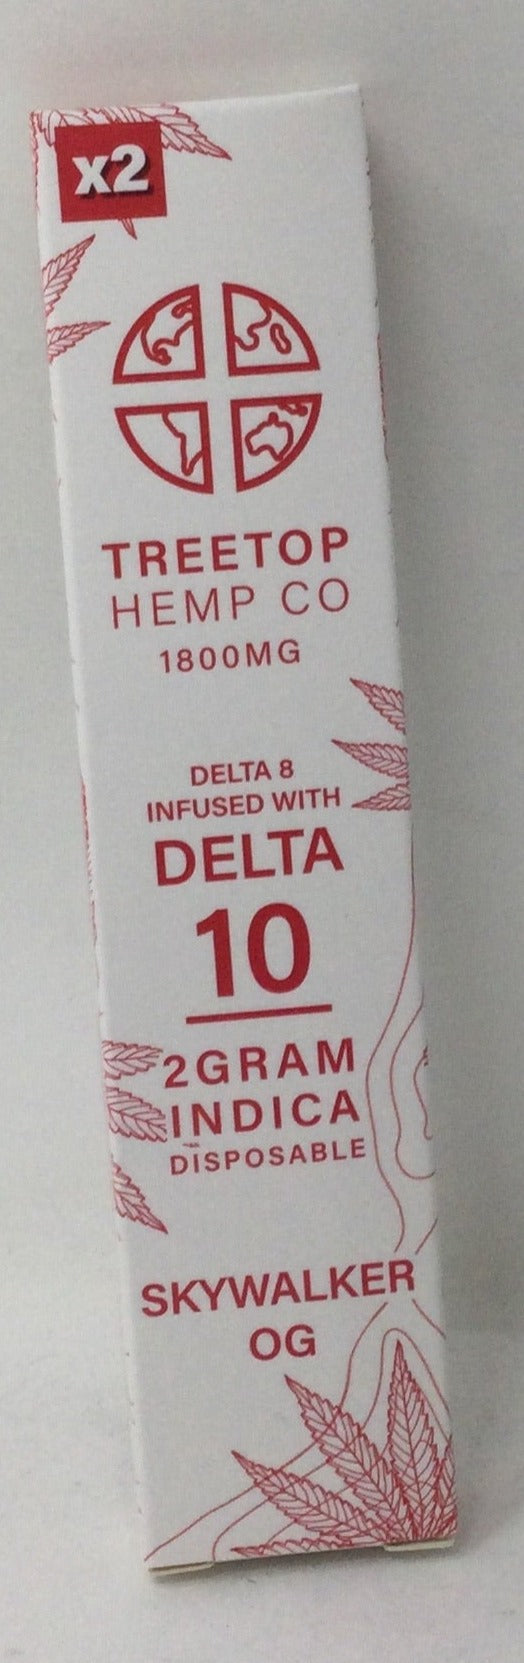 Treetop Delta 10 Disposable 1800 mg